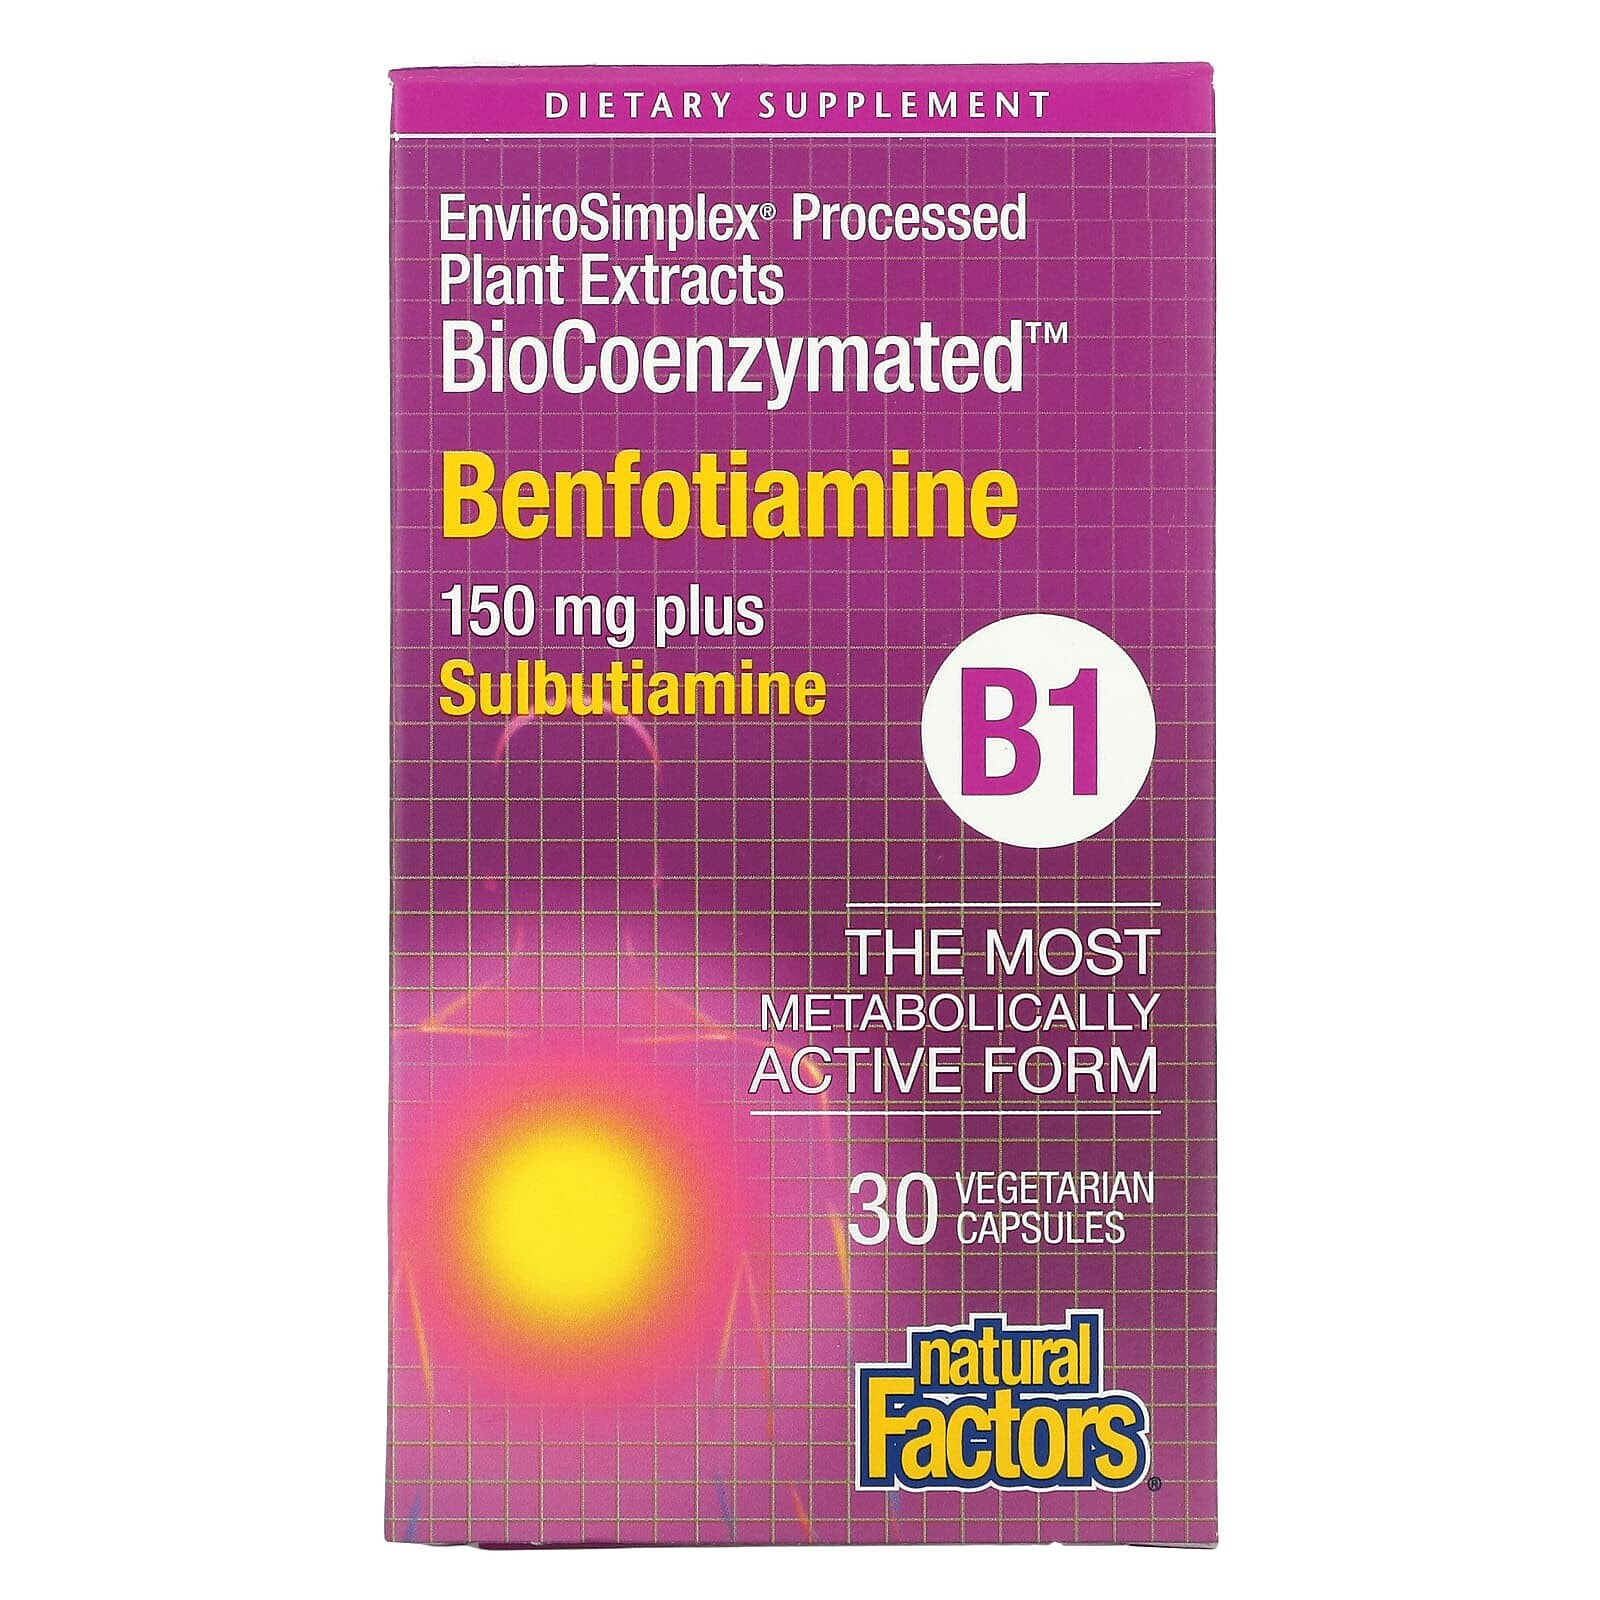 BioCoenzymated, B1, Benfotiamine Plus Sulbutiamine, 150 mg, 30 Vegetarian Capsules